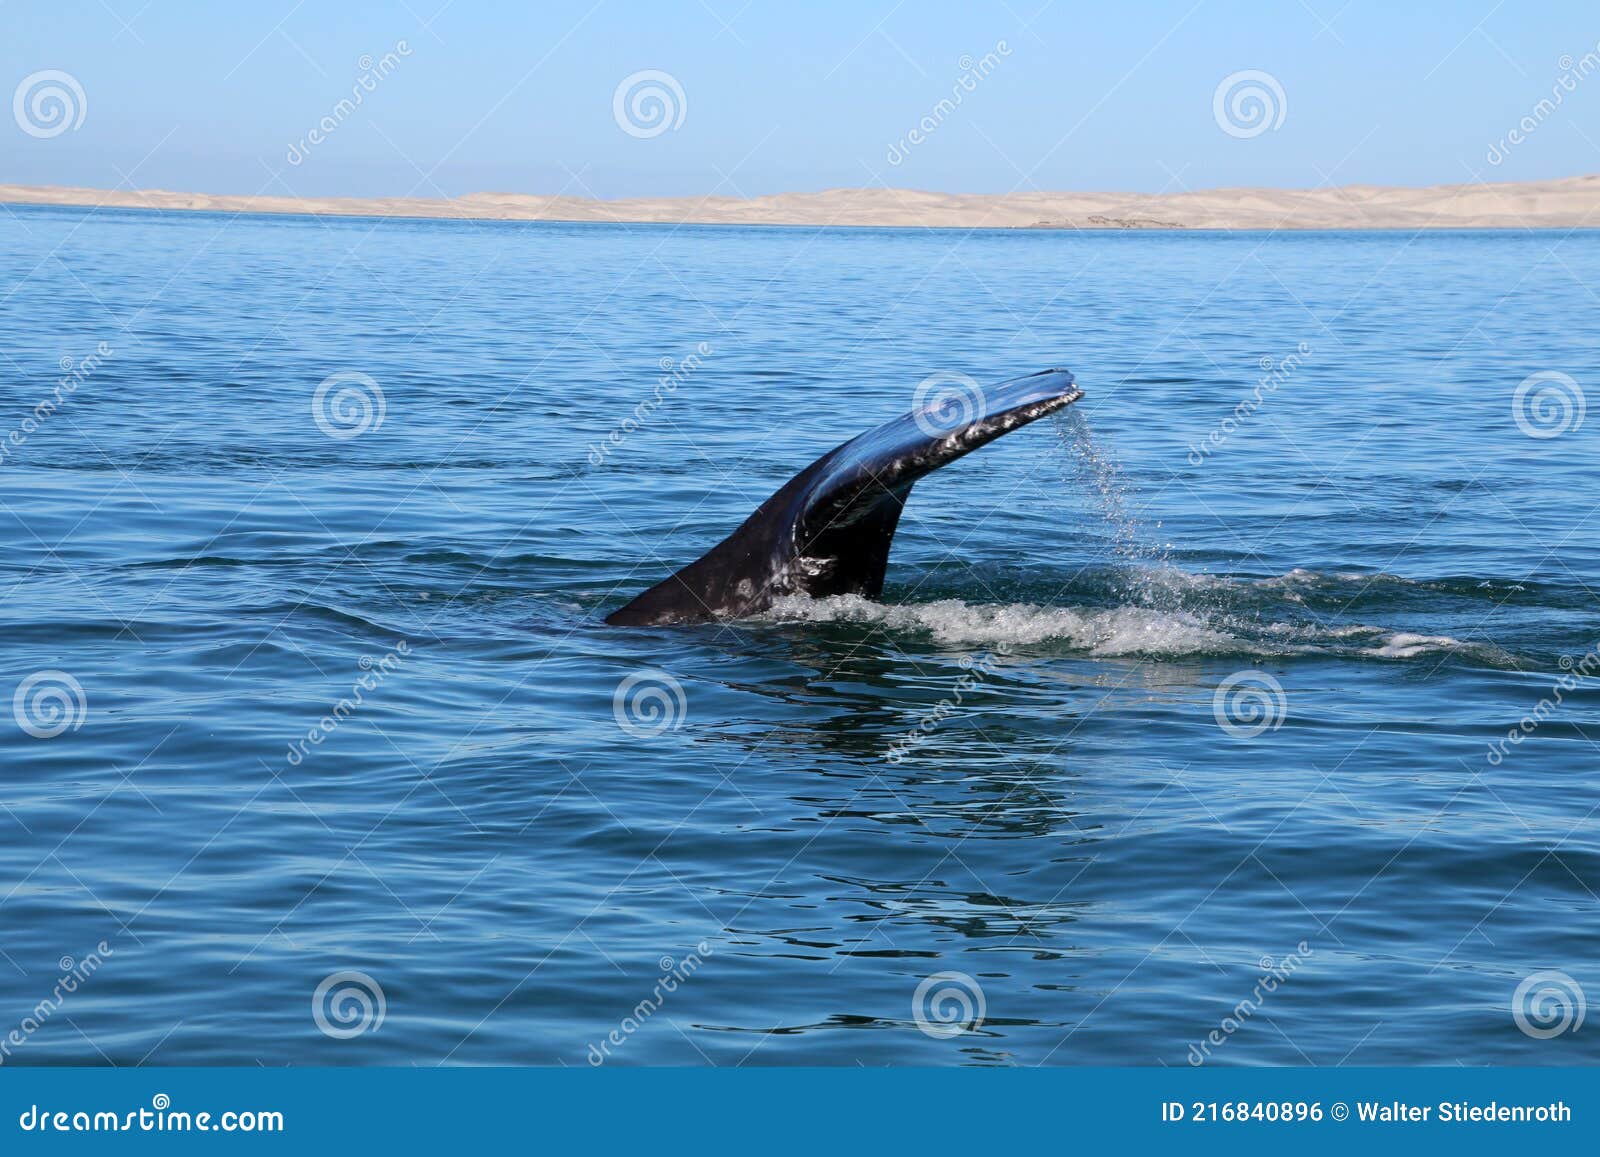 fluke one gray whale baja california sur, mexico